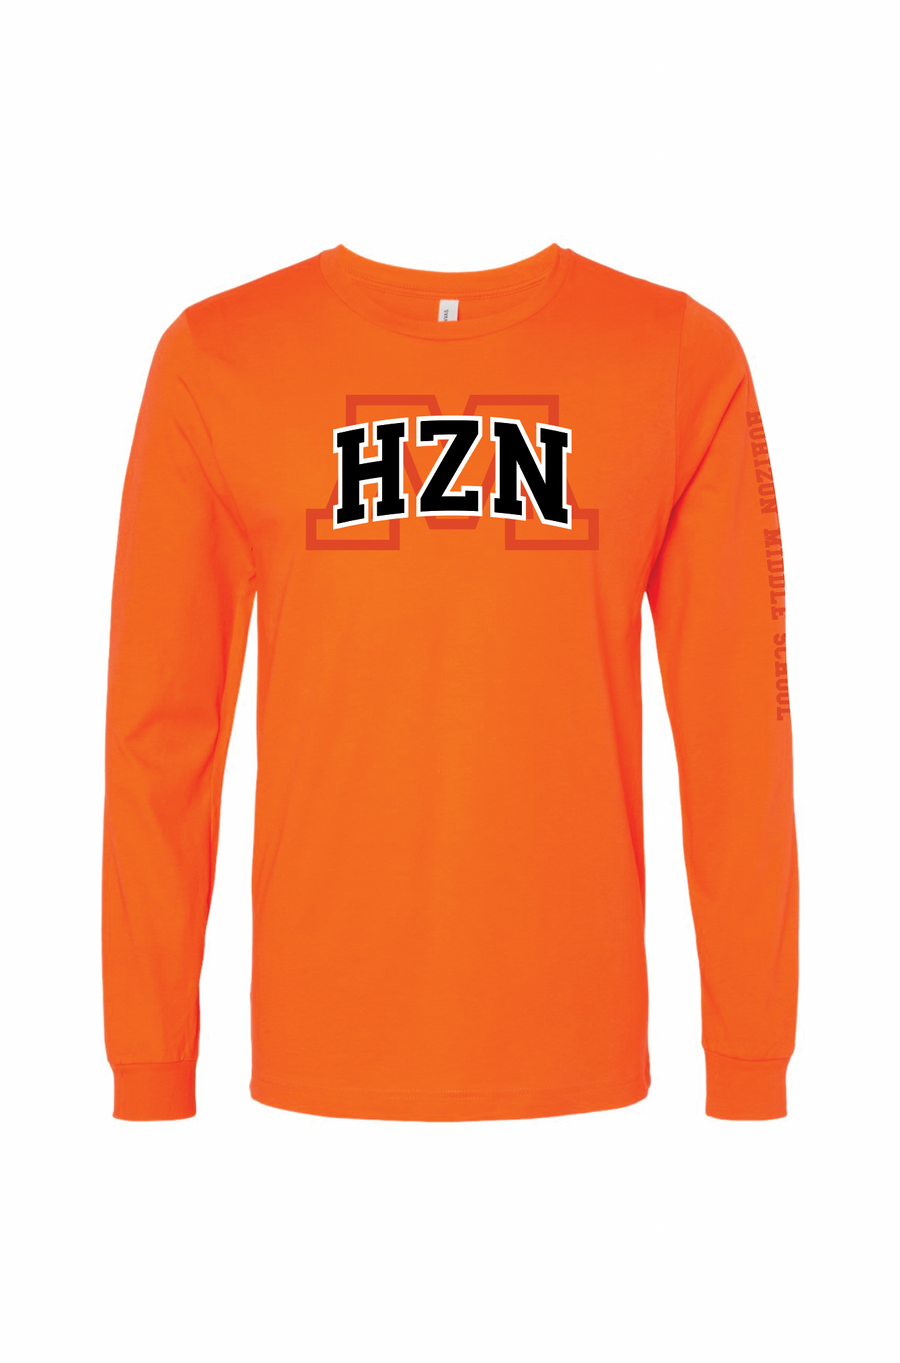 Horizon Middle School Adult long Sleeve T-Shirt